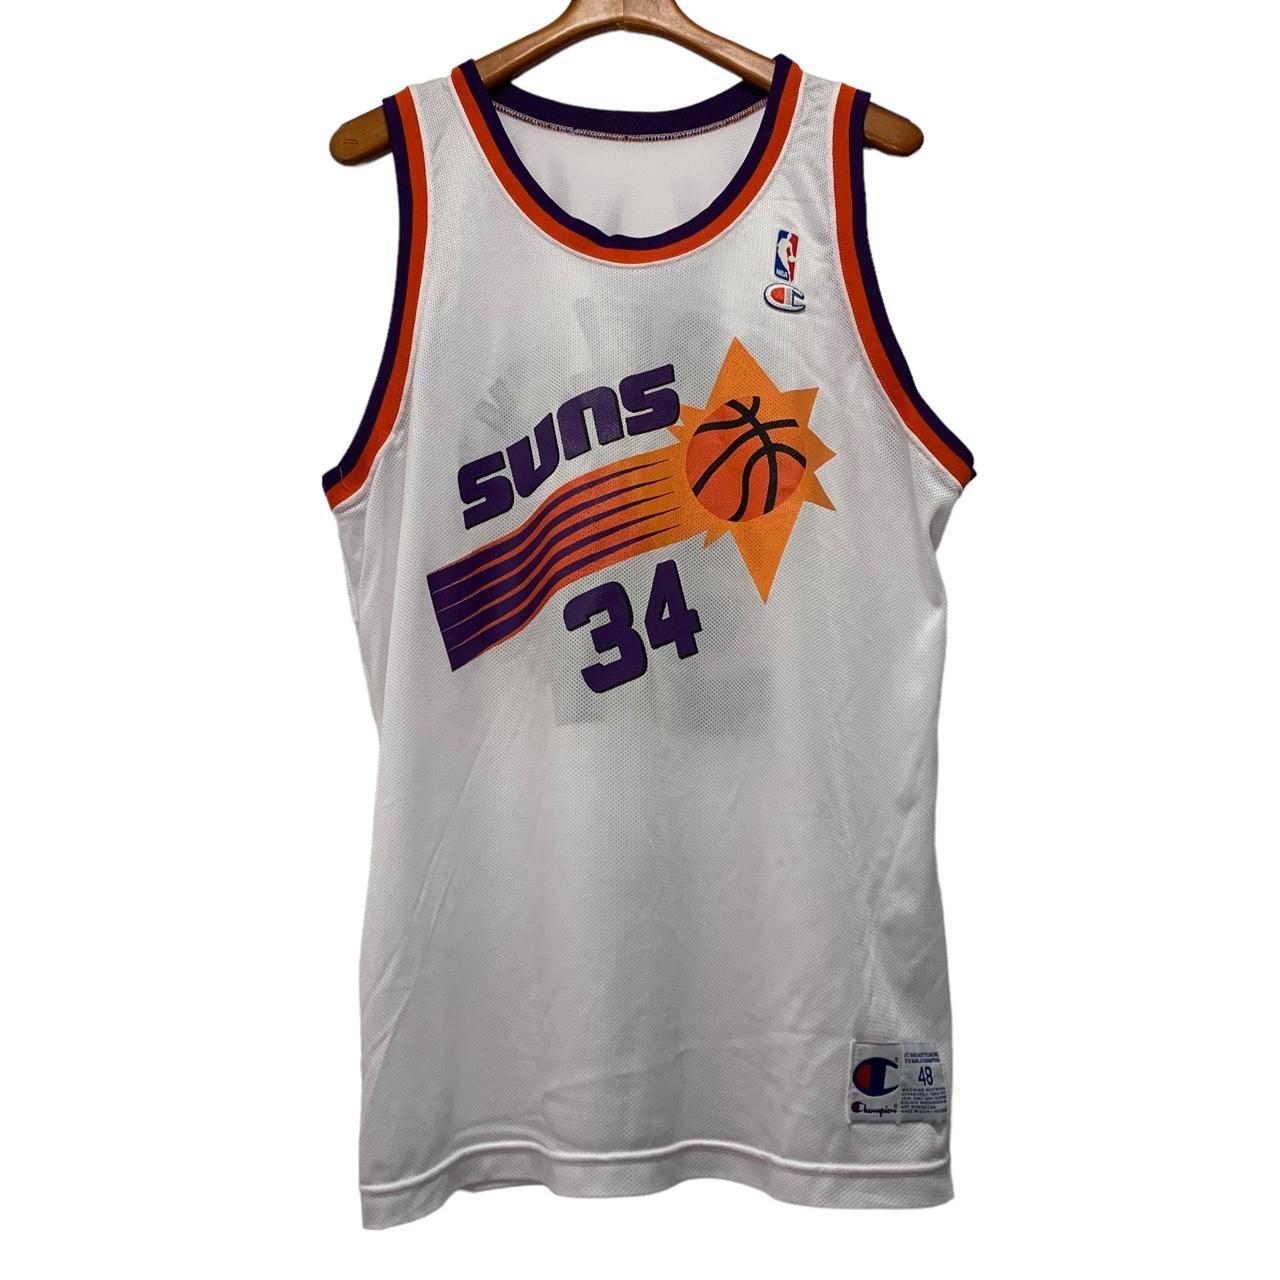 Vintage 90s Champion NBA Phoenix Suns Charles Barkley 34 White